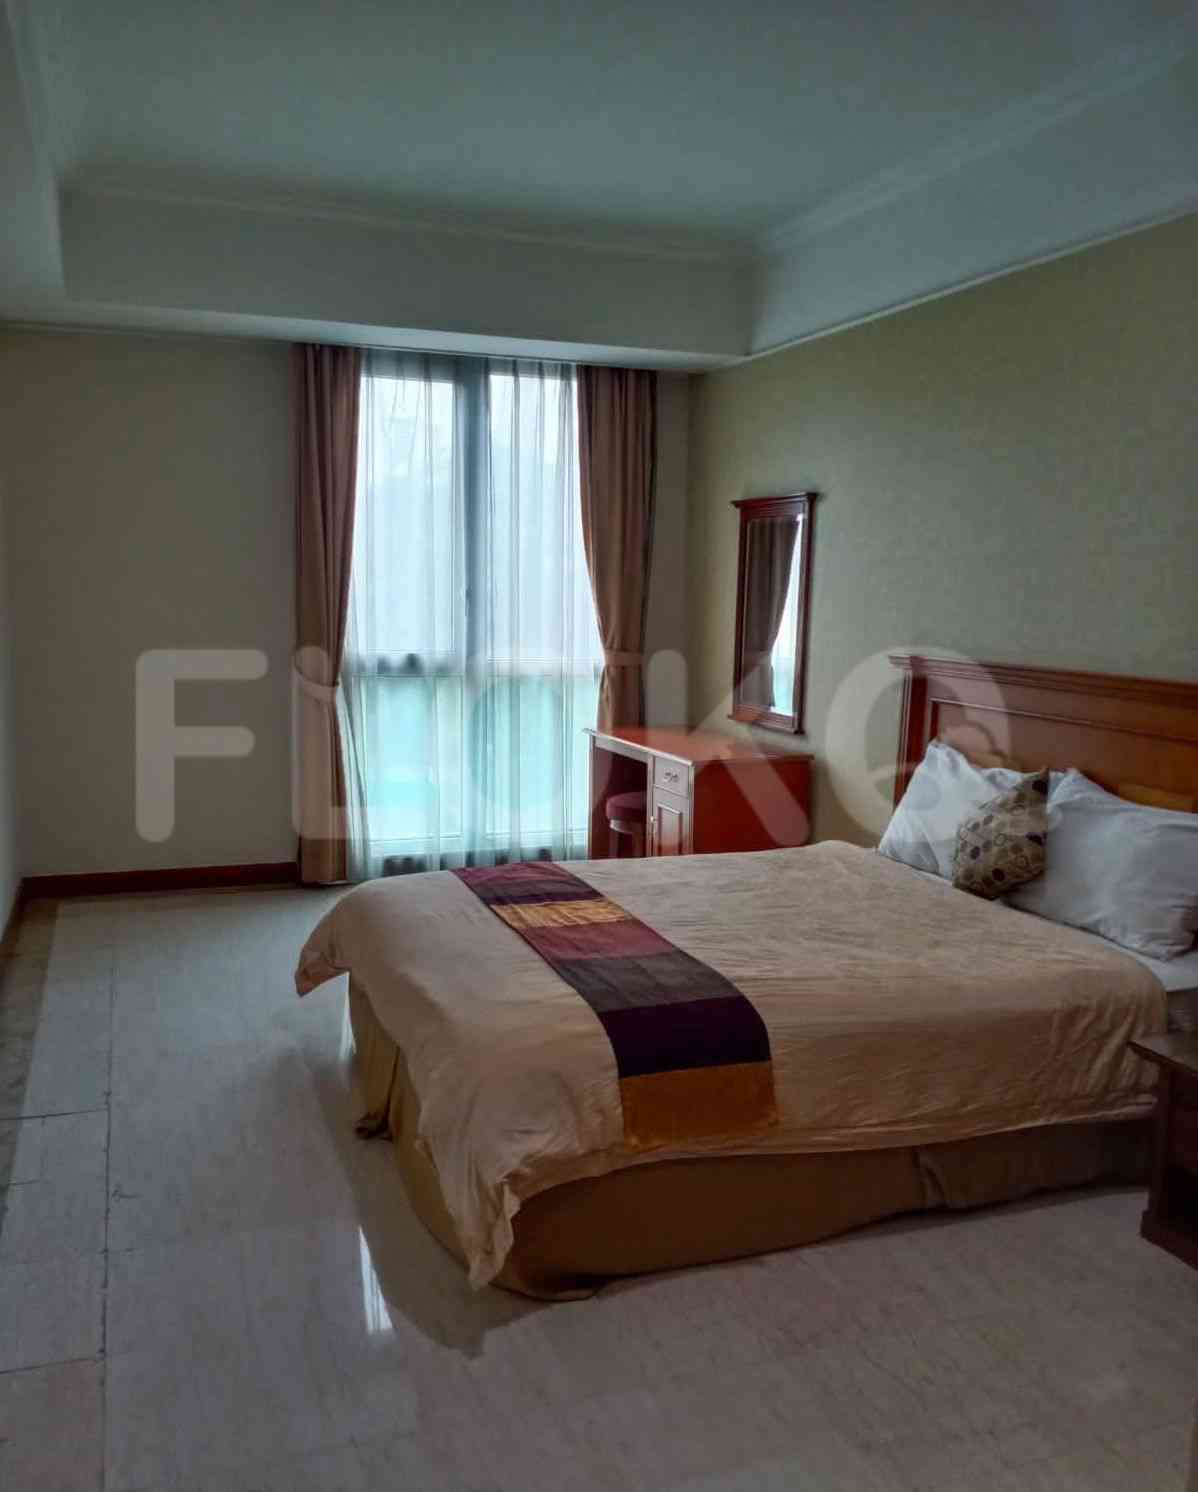 3 Bedroom on 2nd Floor for Rent in Casablanca Apartment - fte11b 2